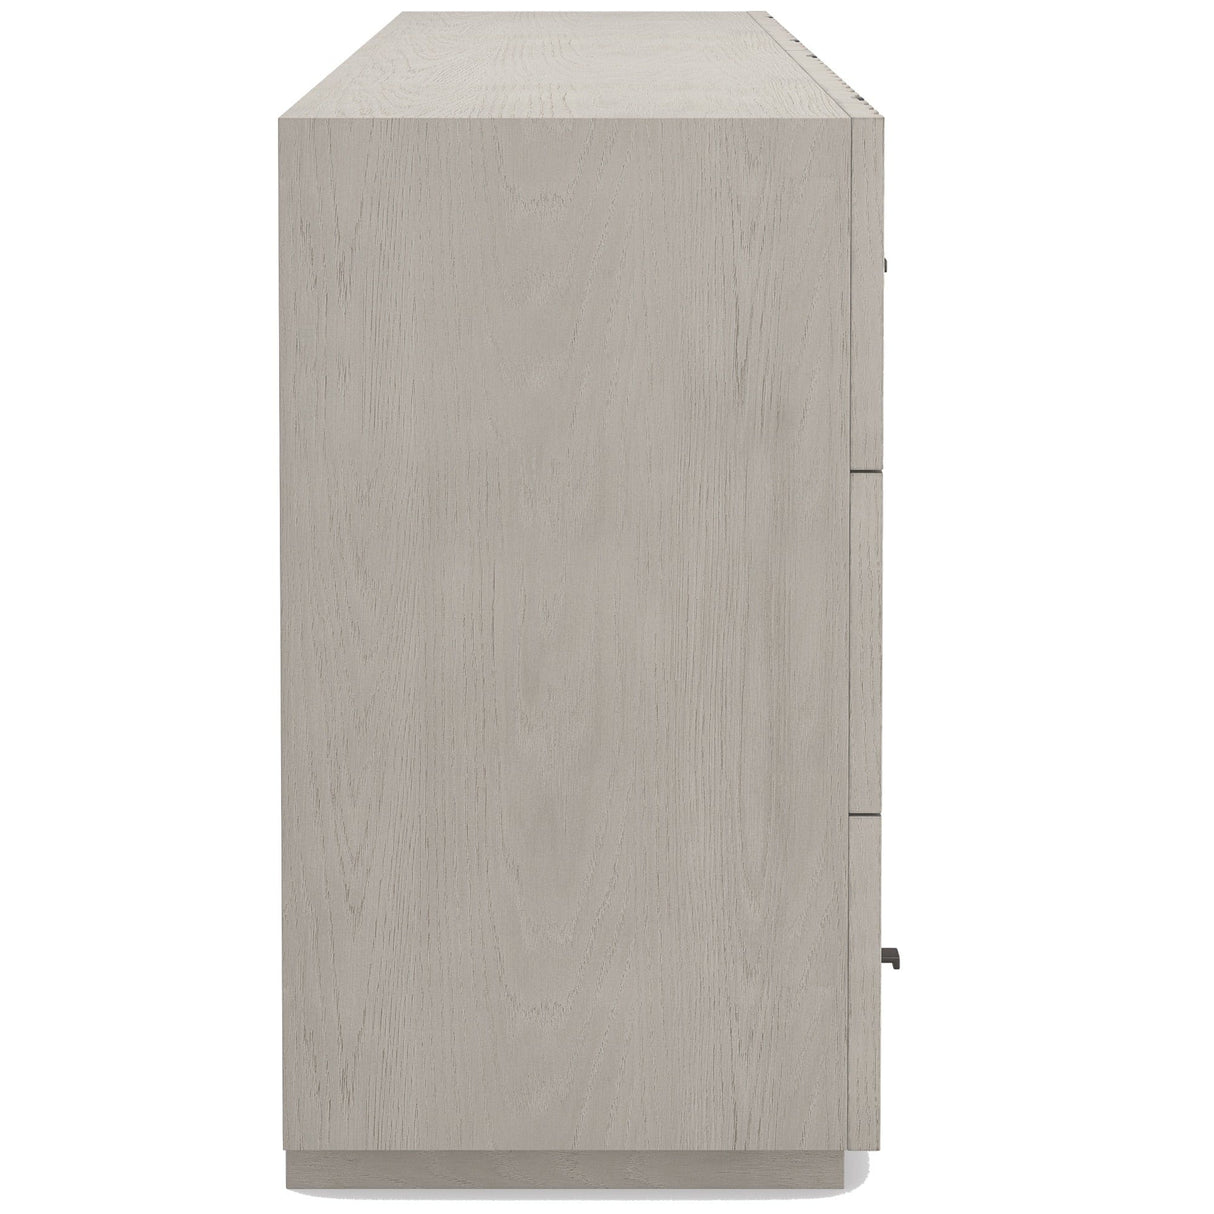 Caracole Clancy Dresser Dressers caracole-KHC-022-032 662896046151